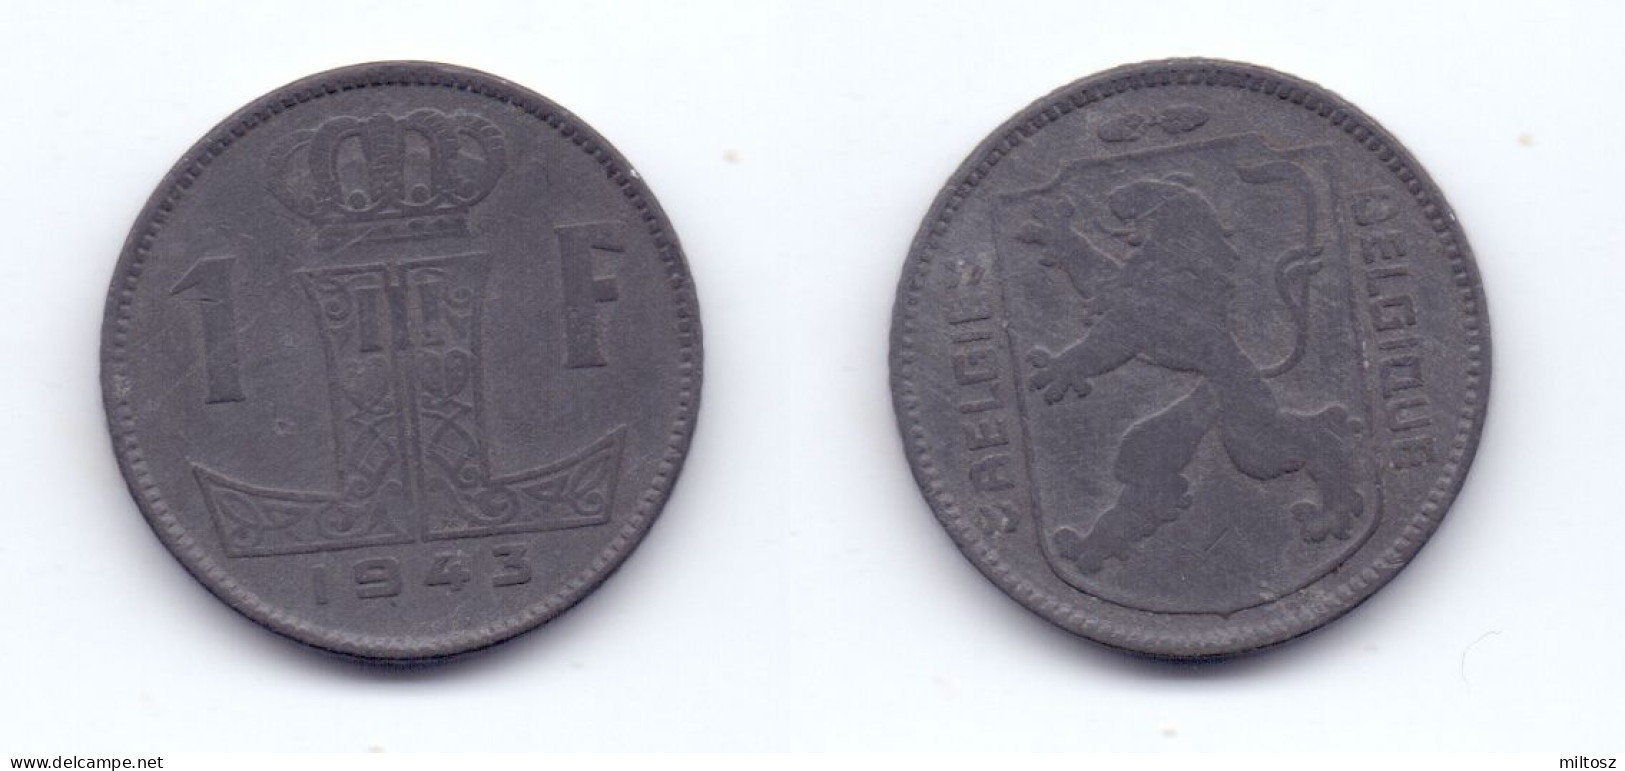 Belgium 1 Franc 1943 WWII Issue BELGIE-BELGIQUE - 1 Frank